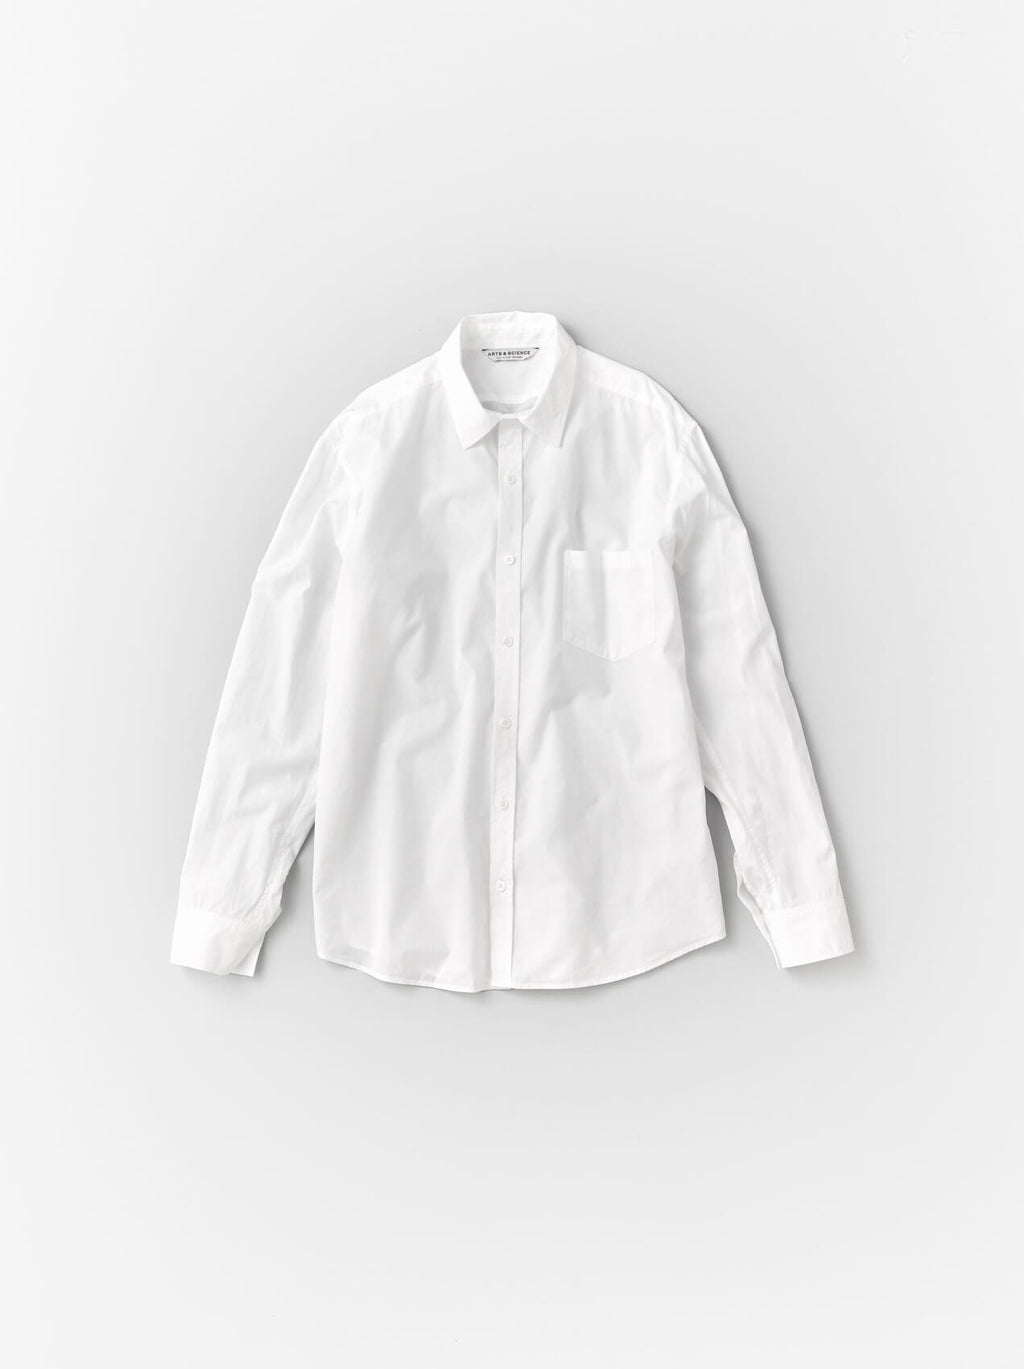 Standard shirt – ARTSu0026SCIENCE ONLINE SELLER